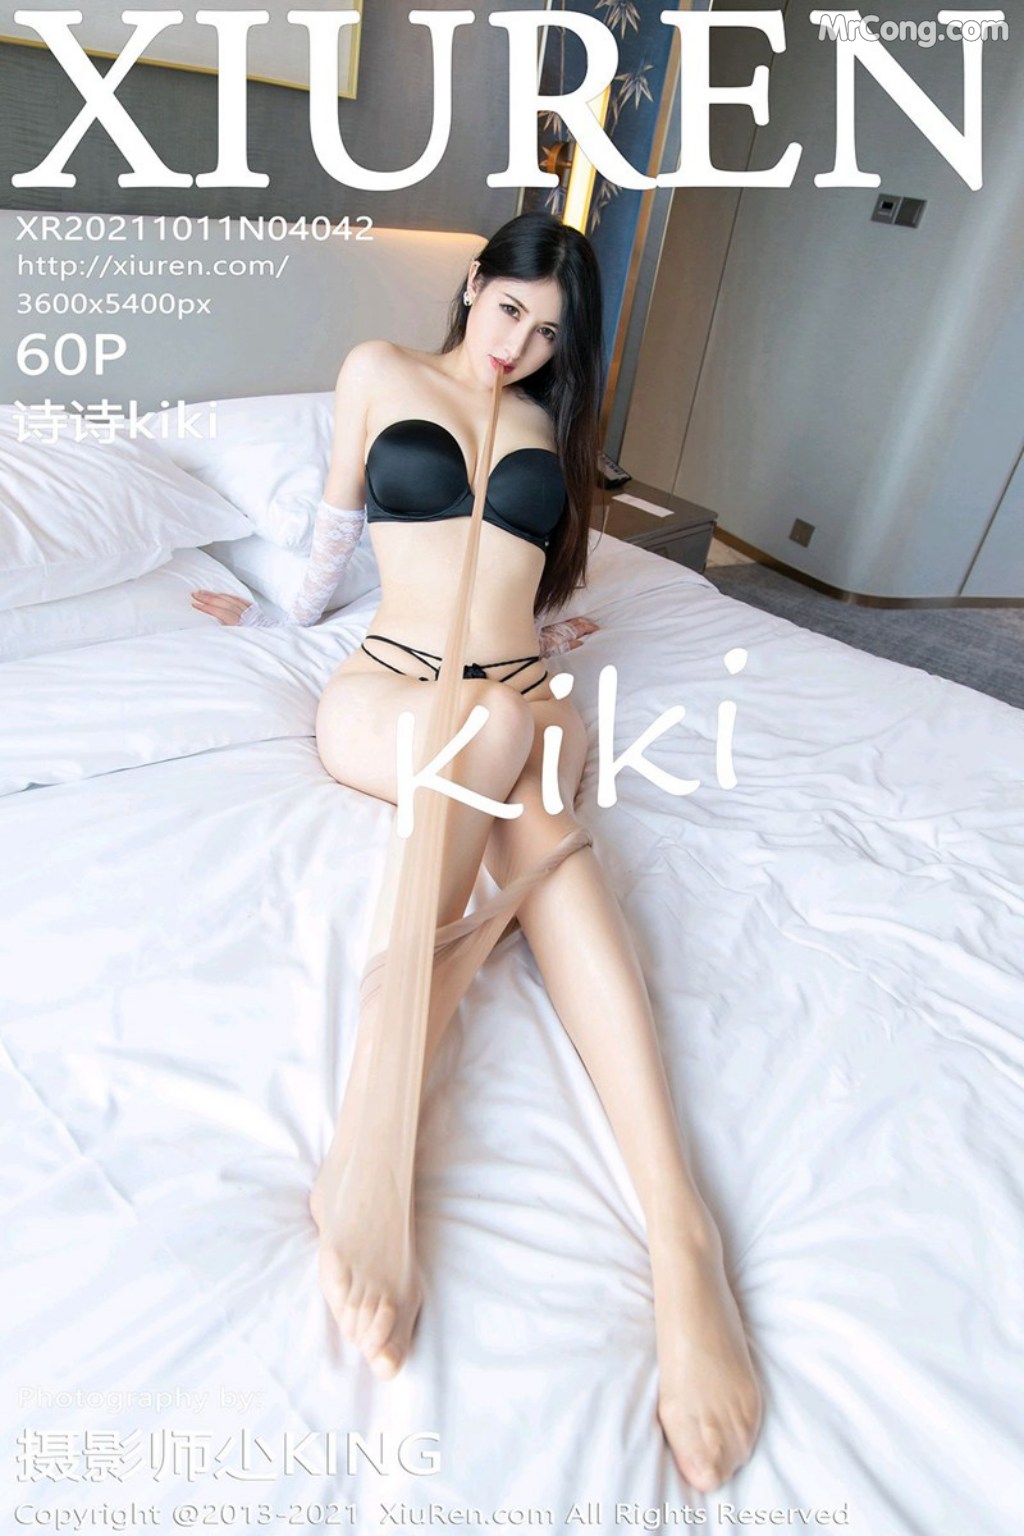 XIUREN No.4042: 诗诗kiki (61 photos)